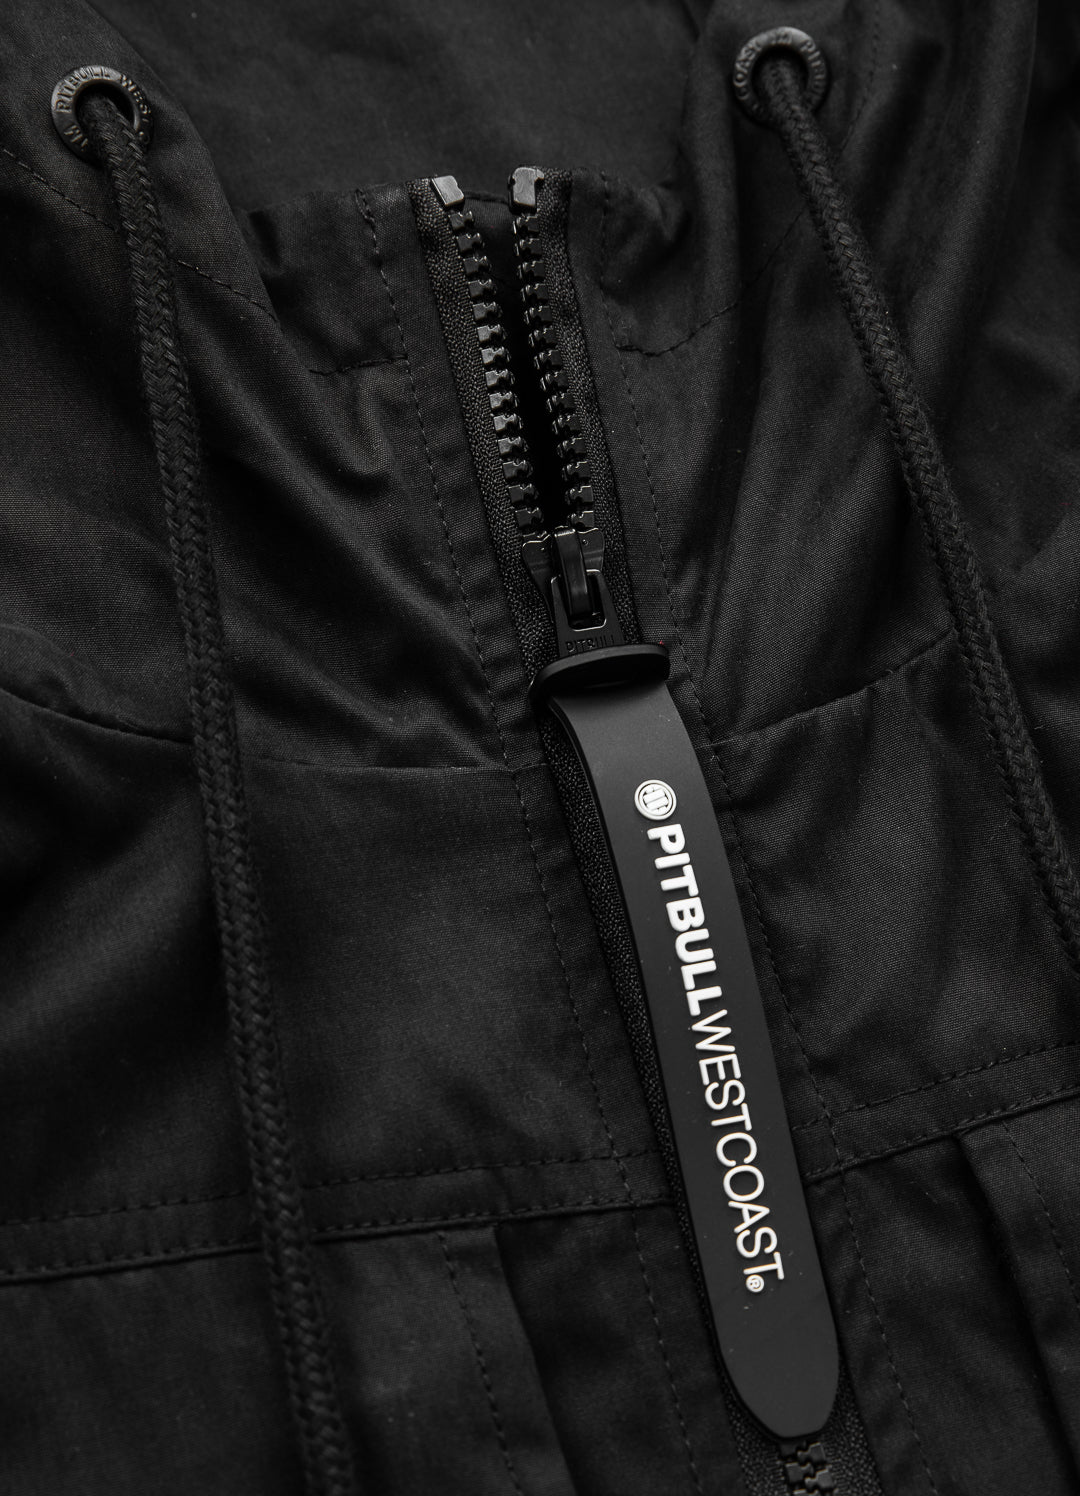 Hooded Jacket ARILLO Black - Pitbull West Coast International Store 